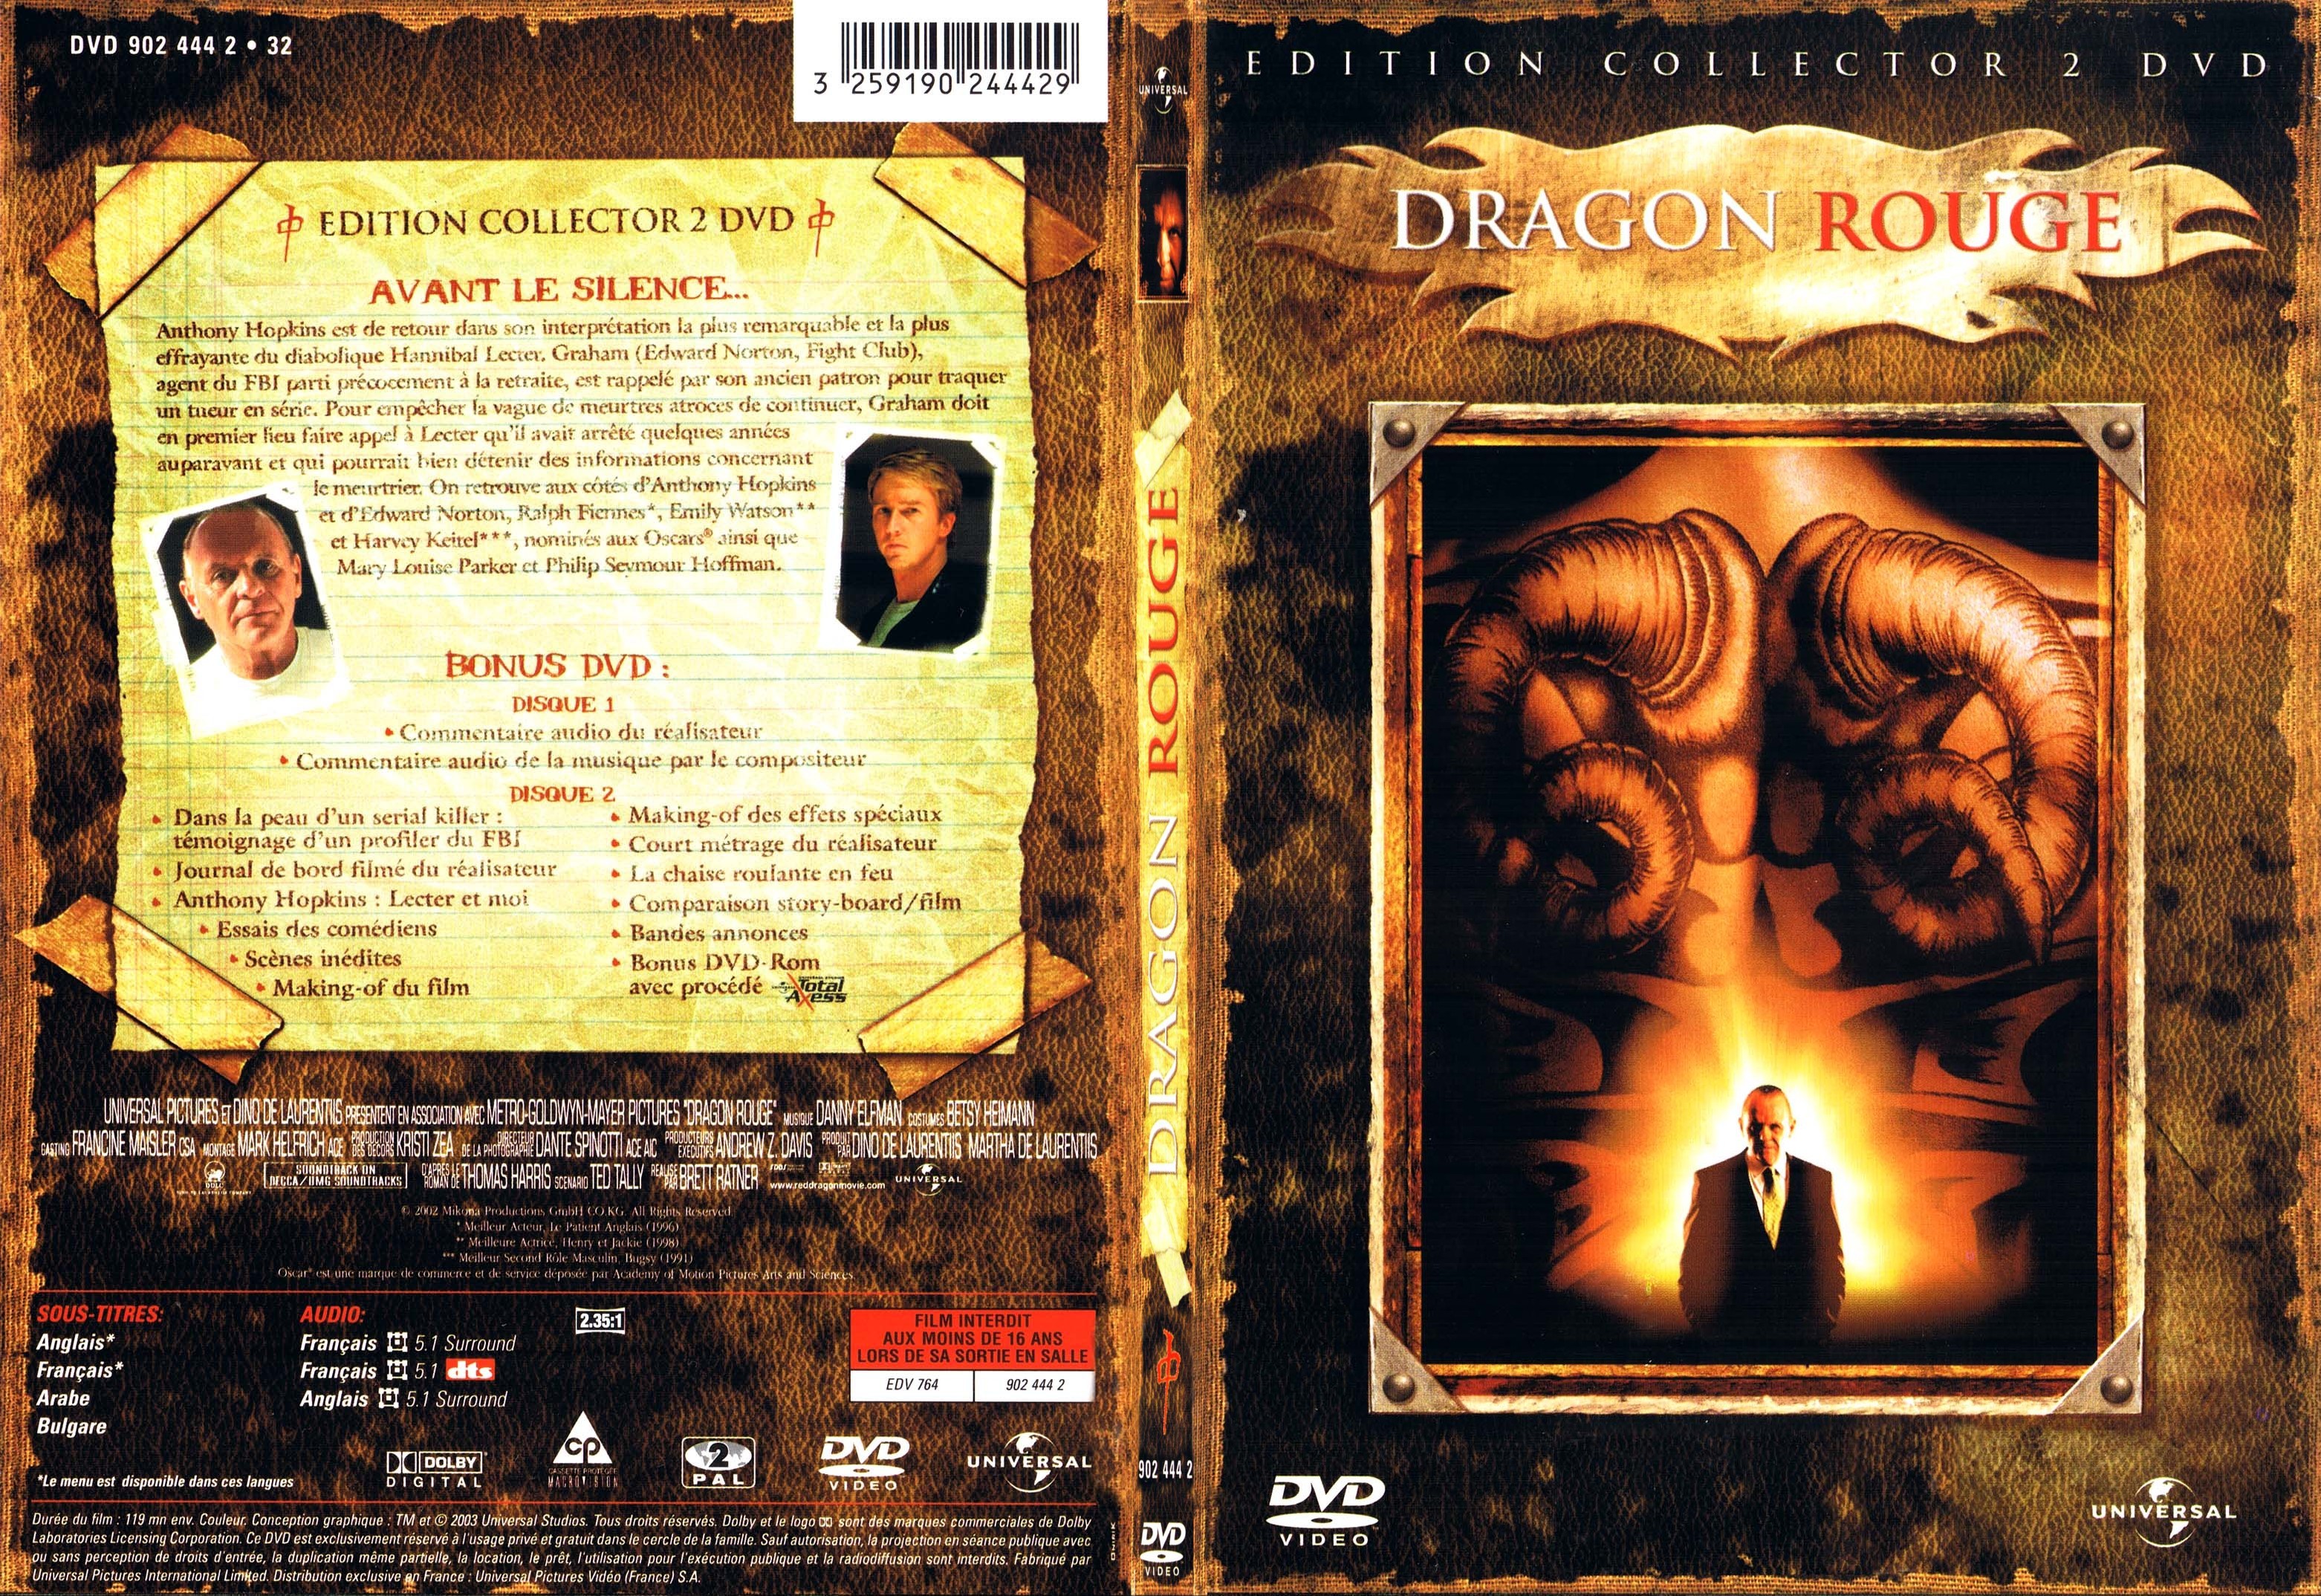 Jaquette DVD Dragon rouge - SLIM